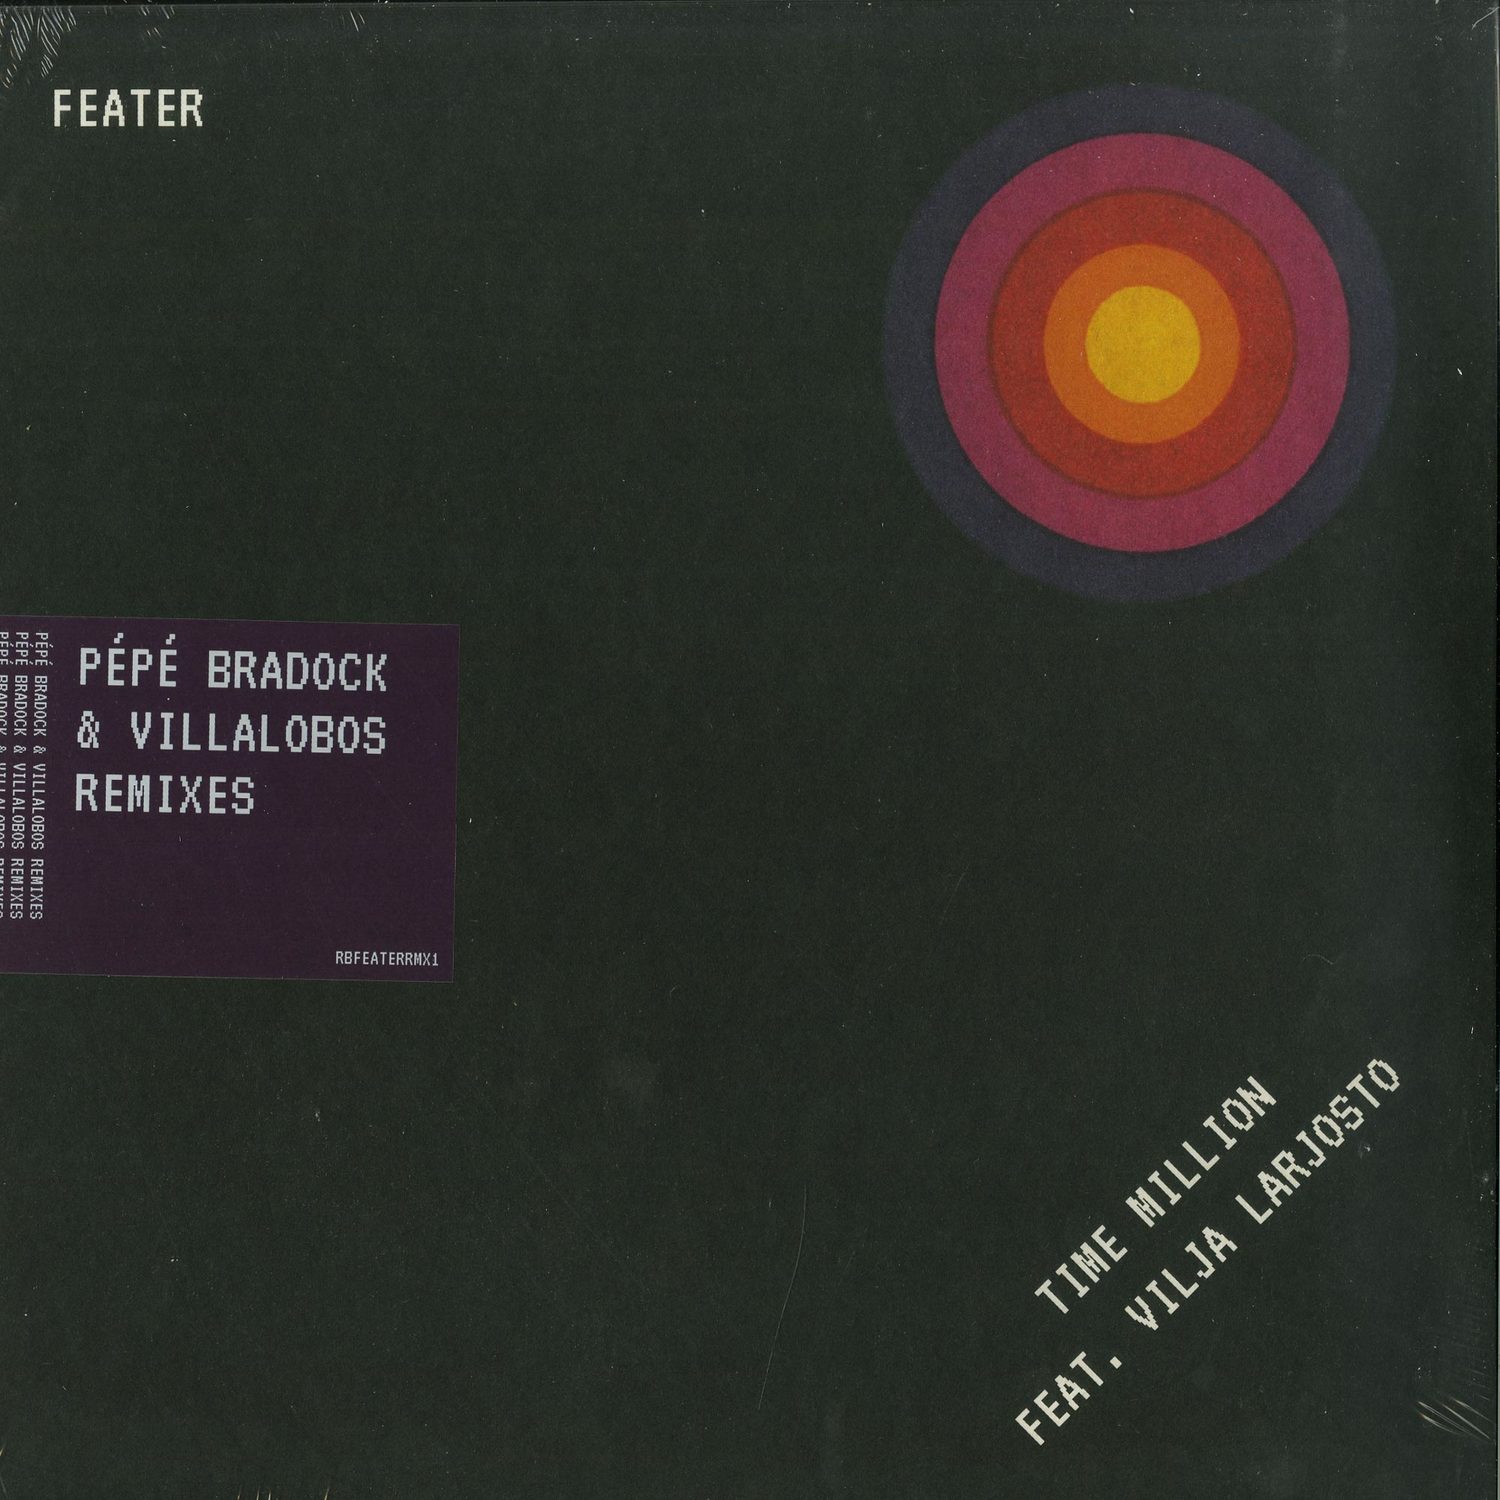 Feater - Time Million Feat. Vilja Larjos - PEPE BRADOCK & VILLALOBOS REMIXES